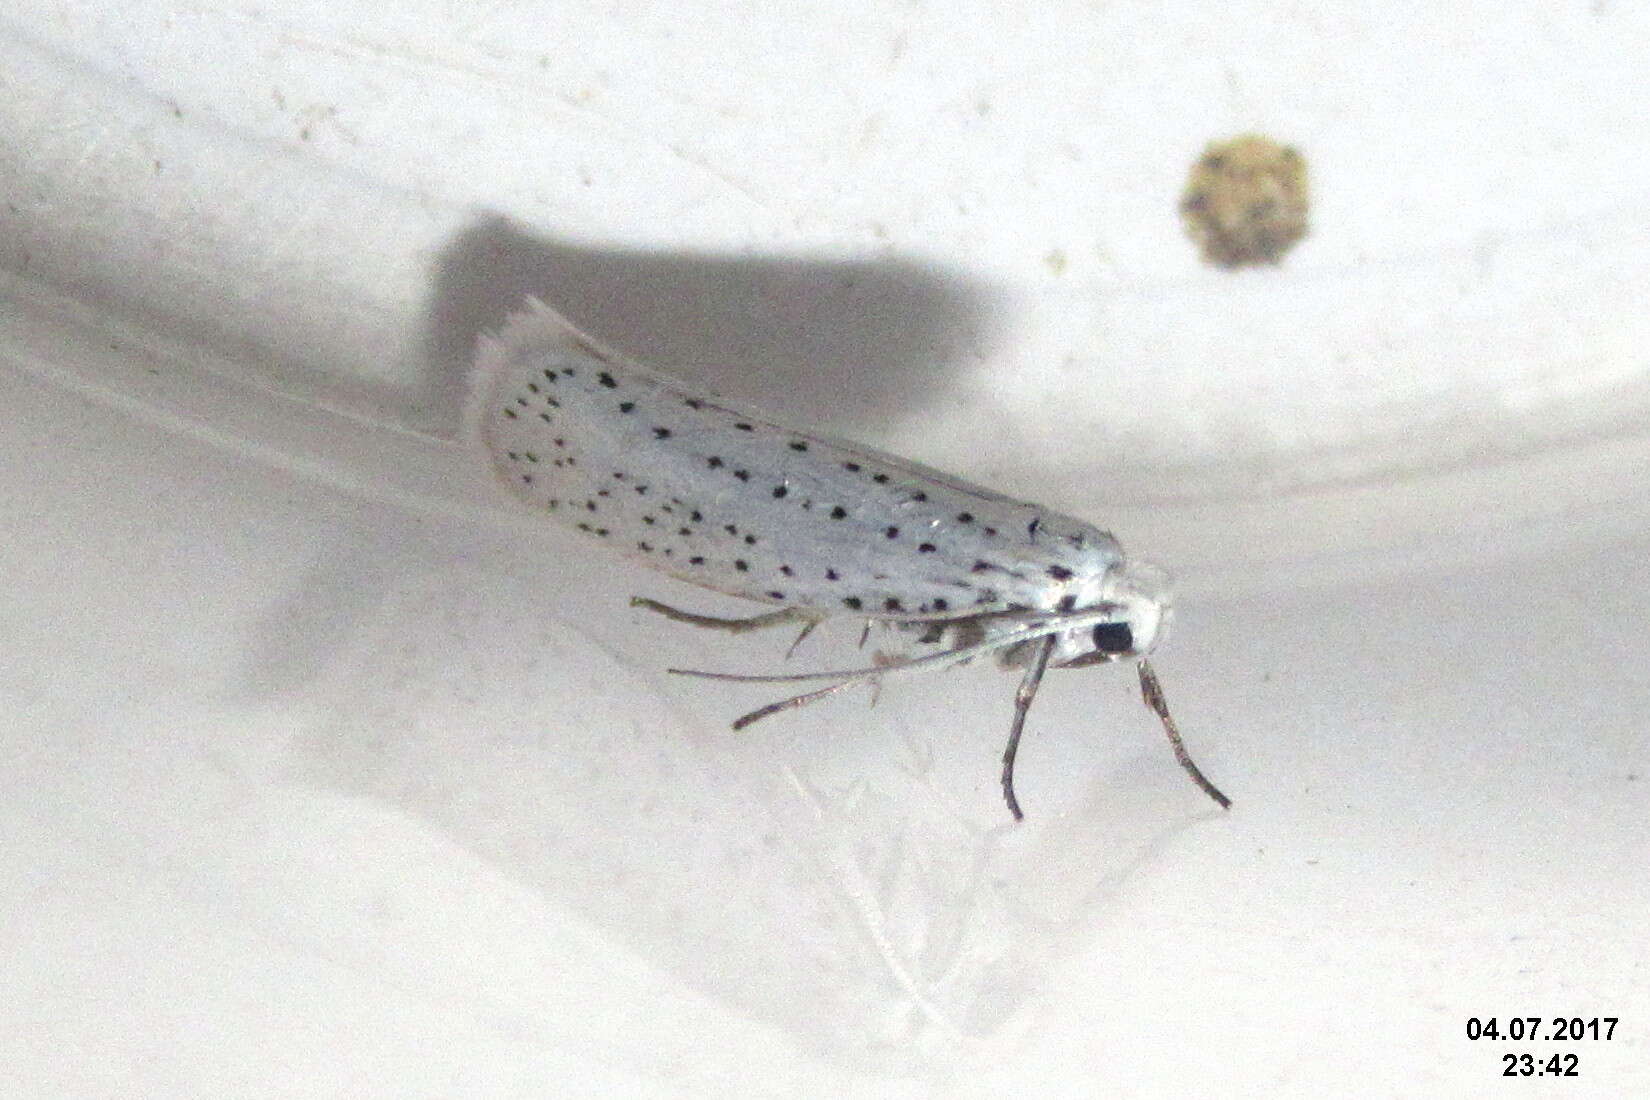 Image of Ermine moth